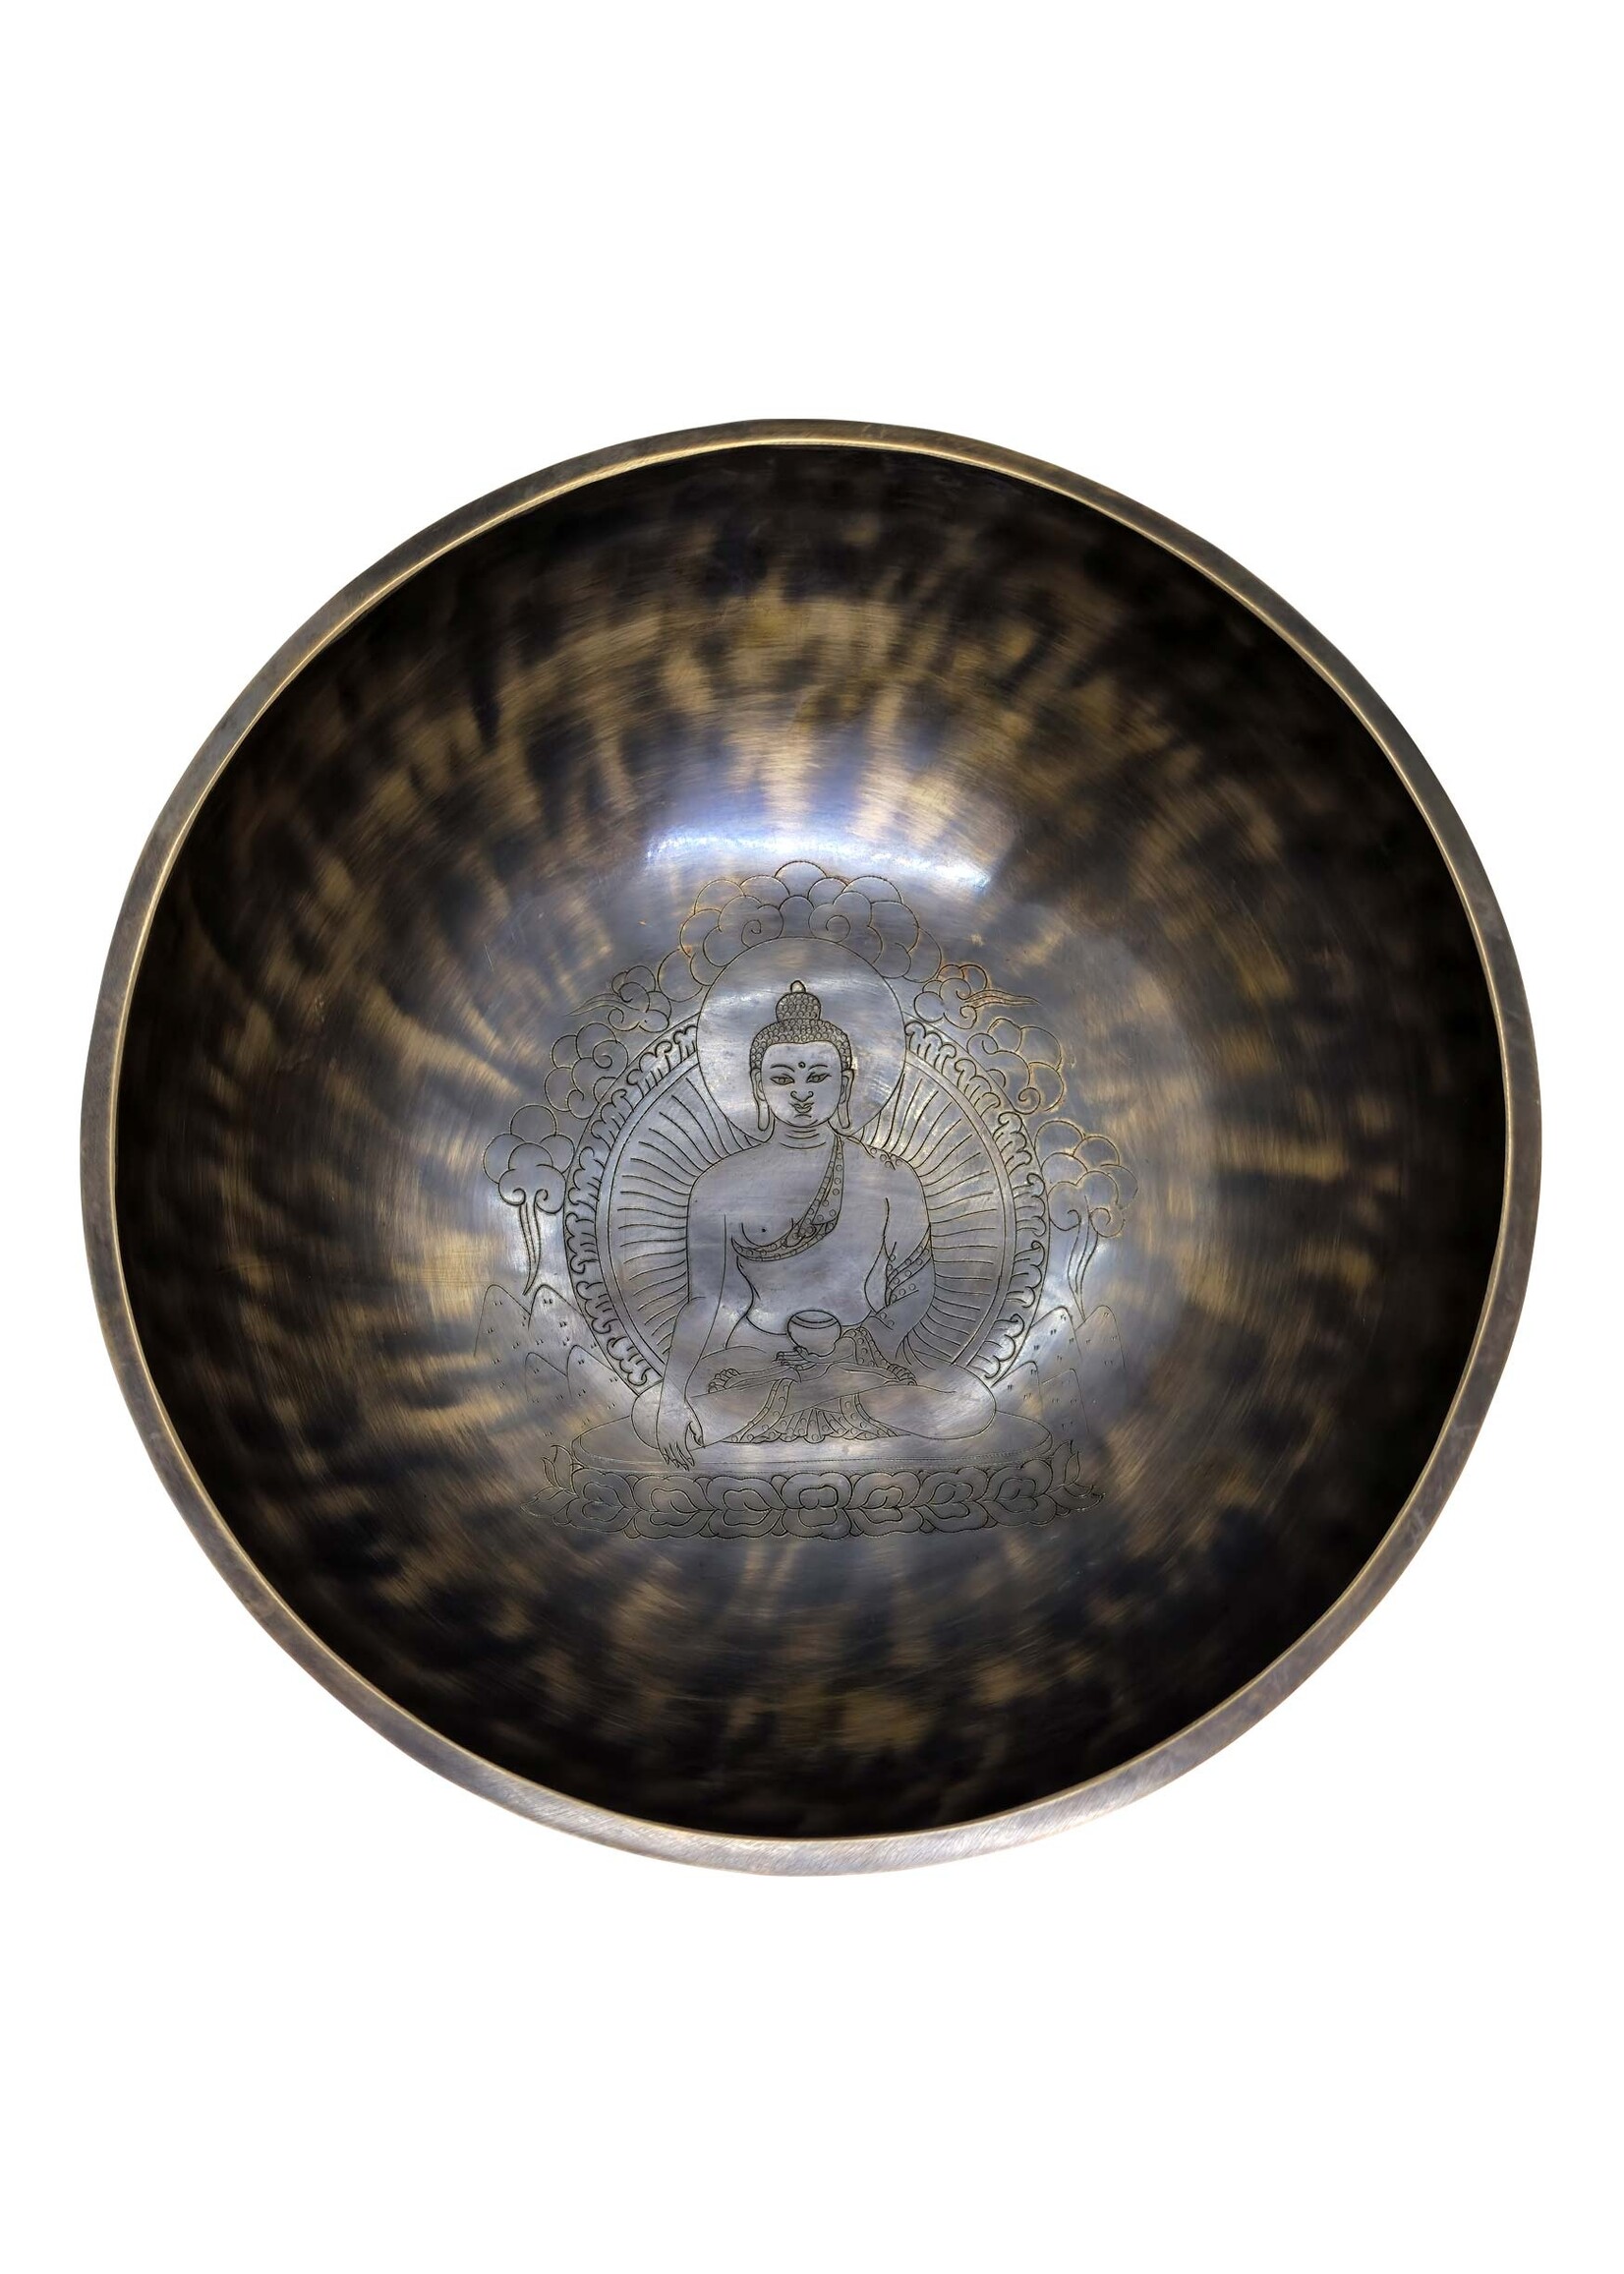 Handmade Tibetan Singing Bowl, Mantra and Buddha engraved, Ø 24 - 26 cm, 1.5 - 2 kg